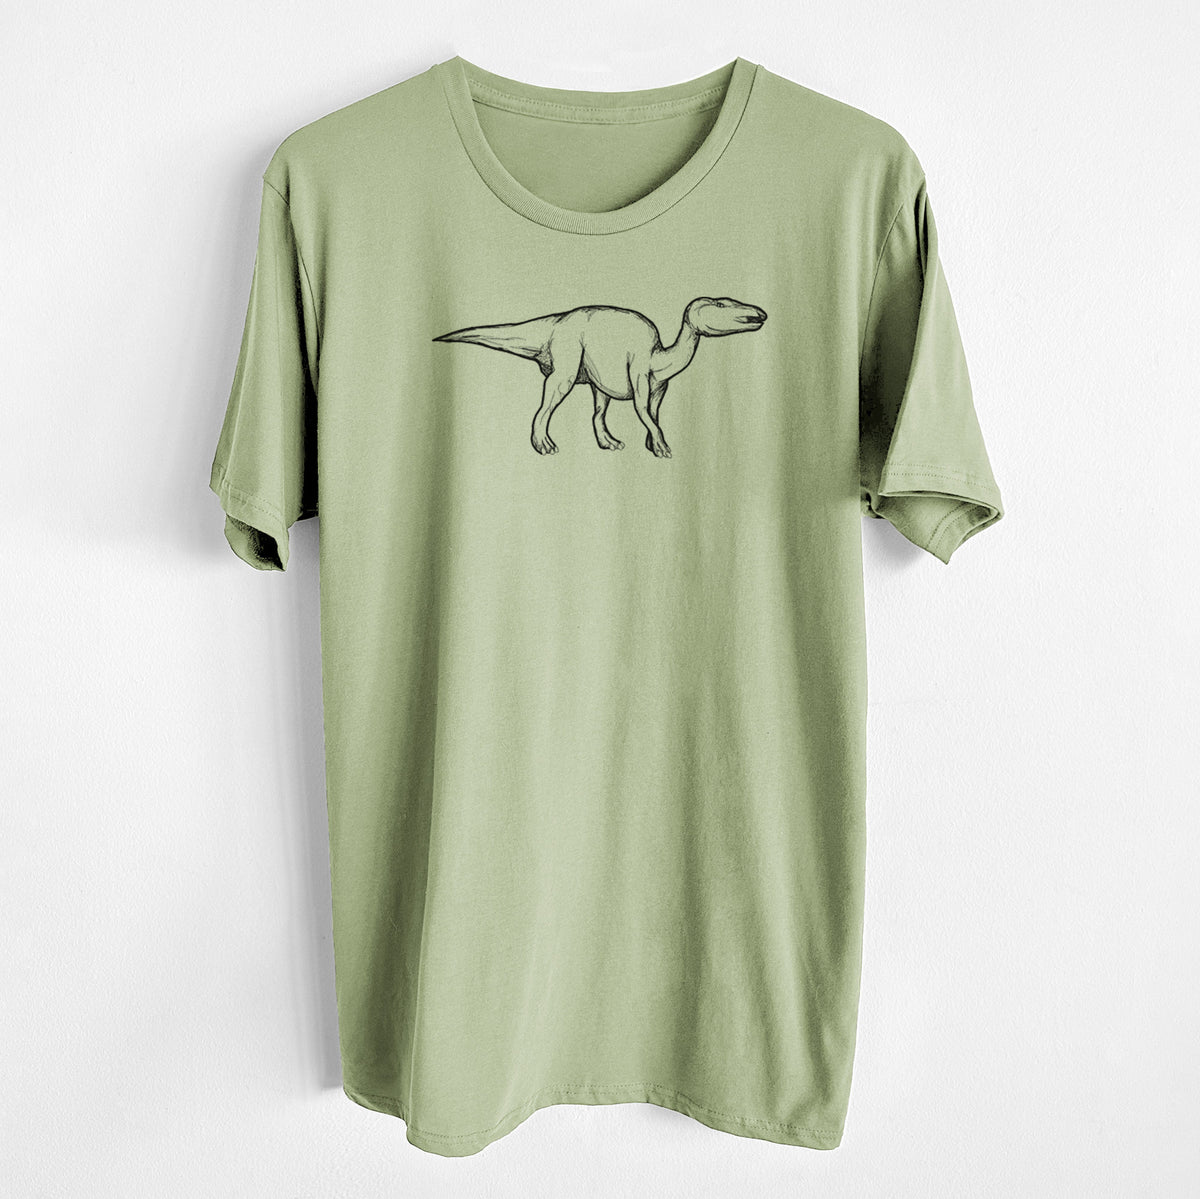 Edmontosaurus Annectens - Unisex Crewneck - Made in USA - 100% Organic Cotton